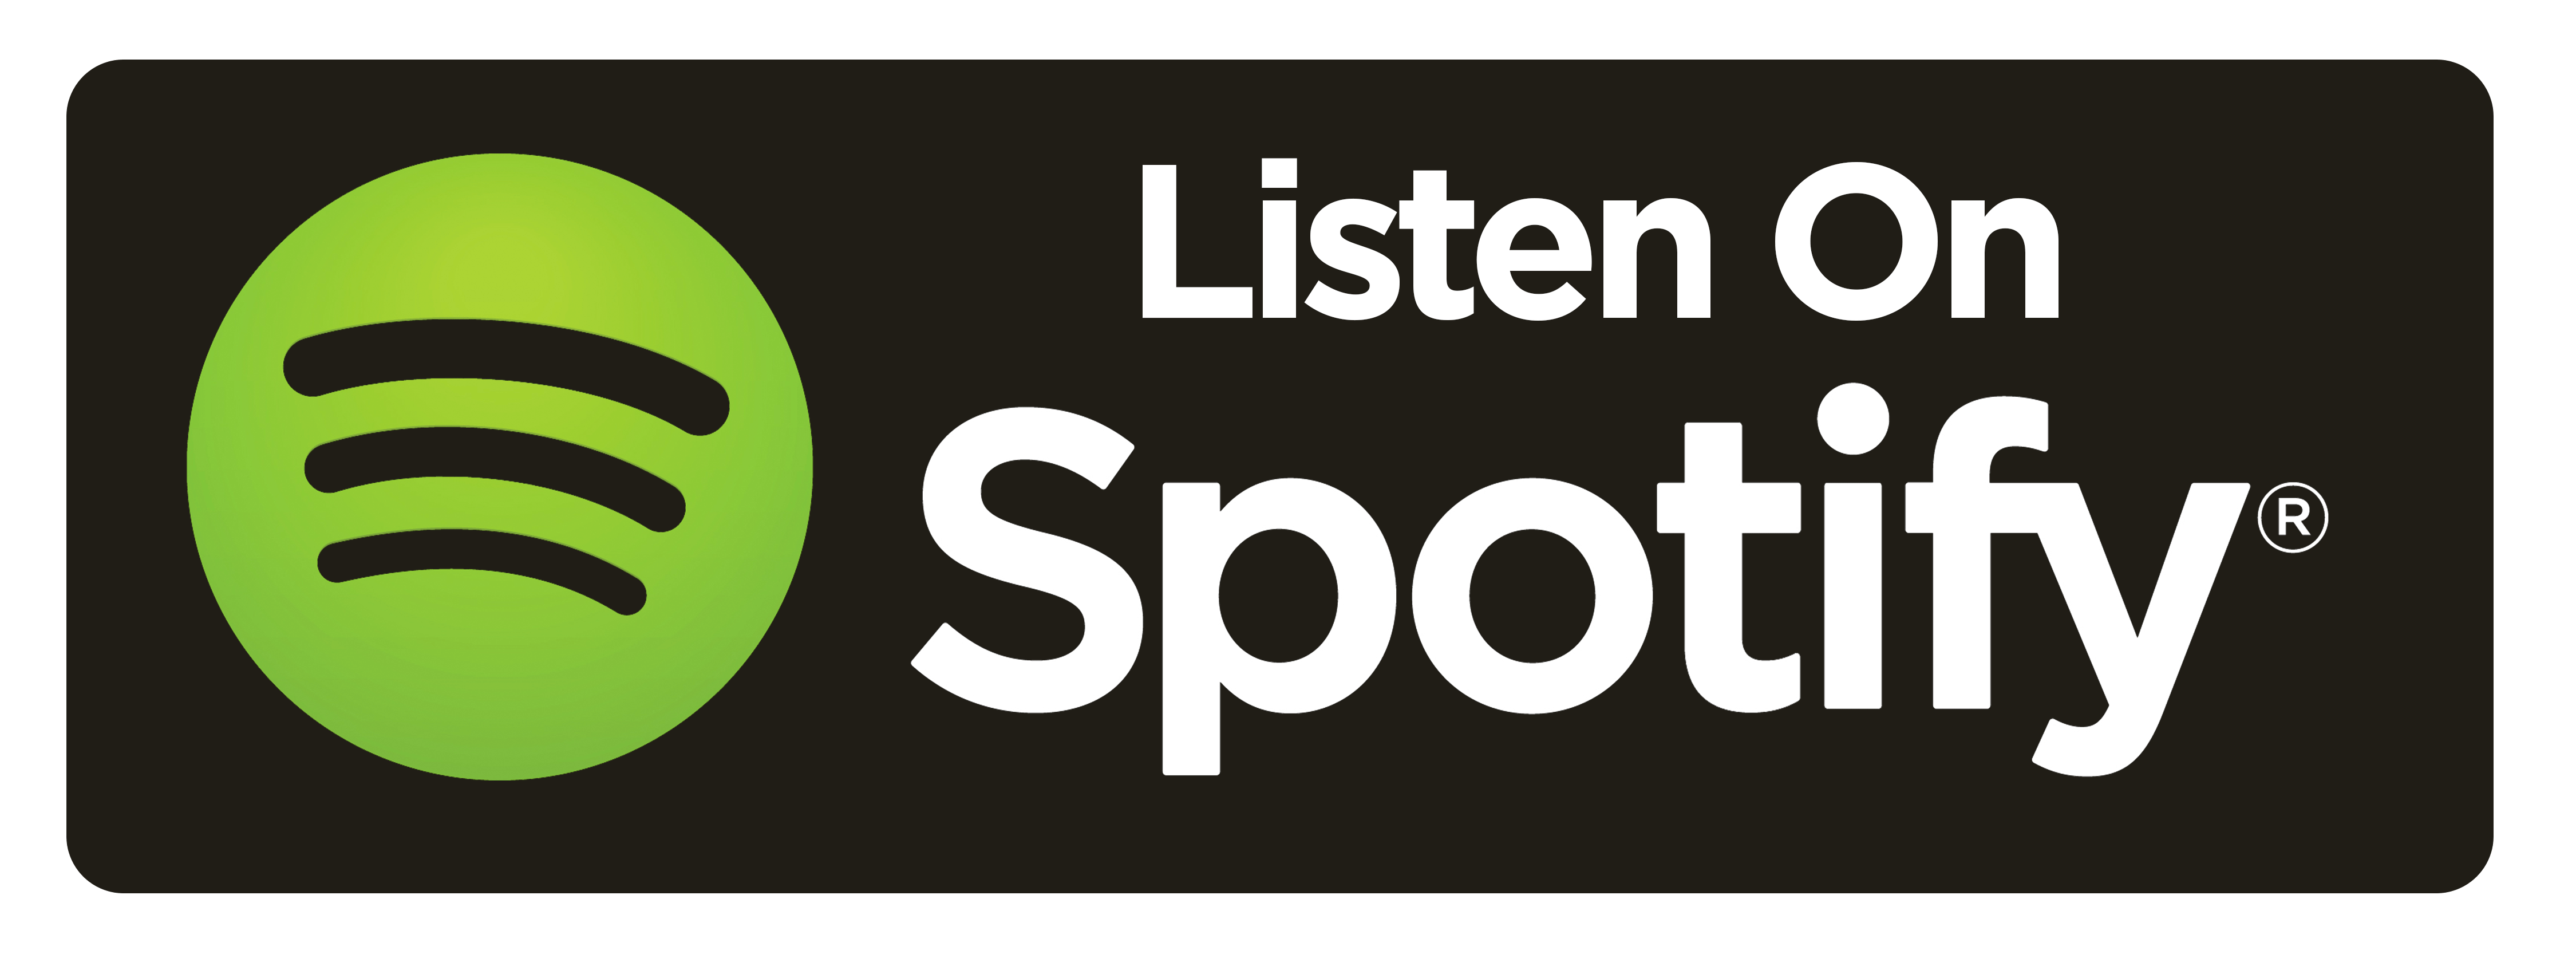 Spotify Vector Logo - Dechen26922 - Songs Of Love